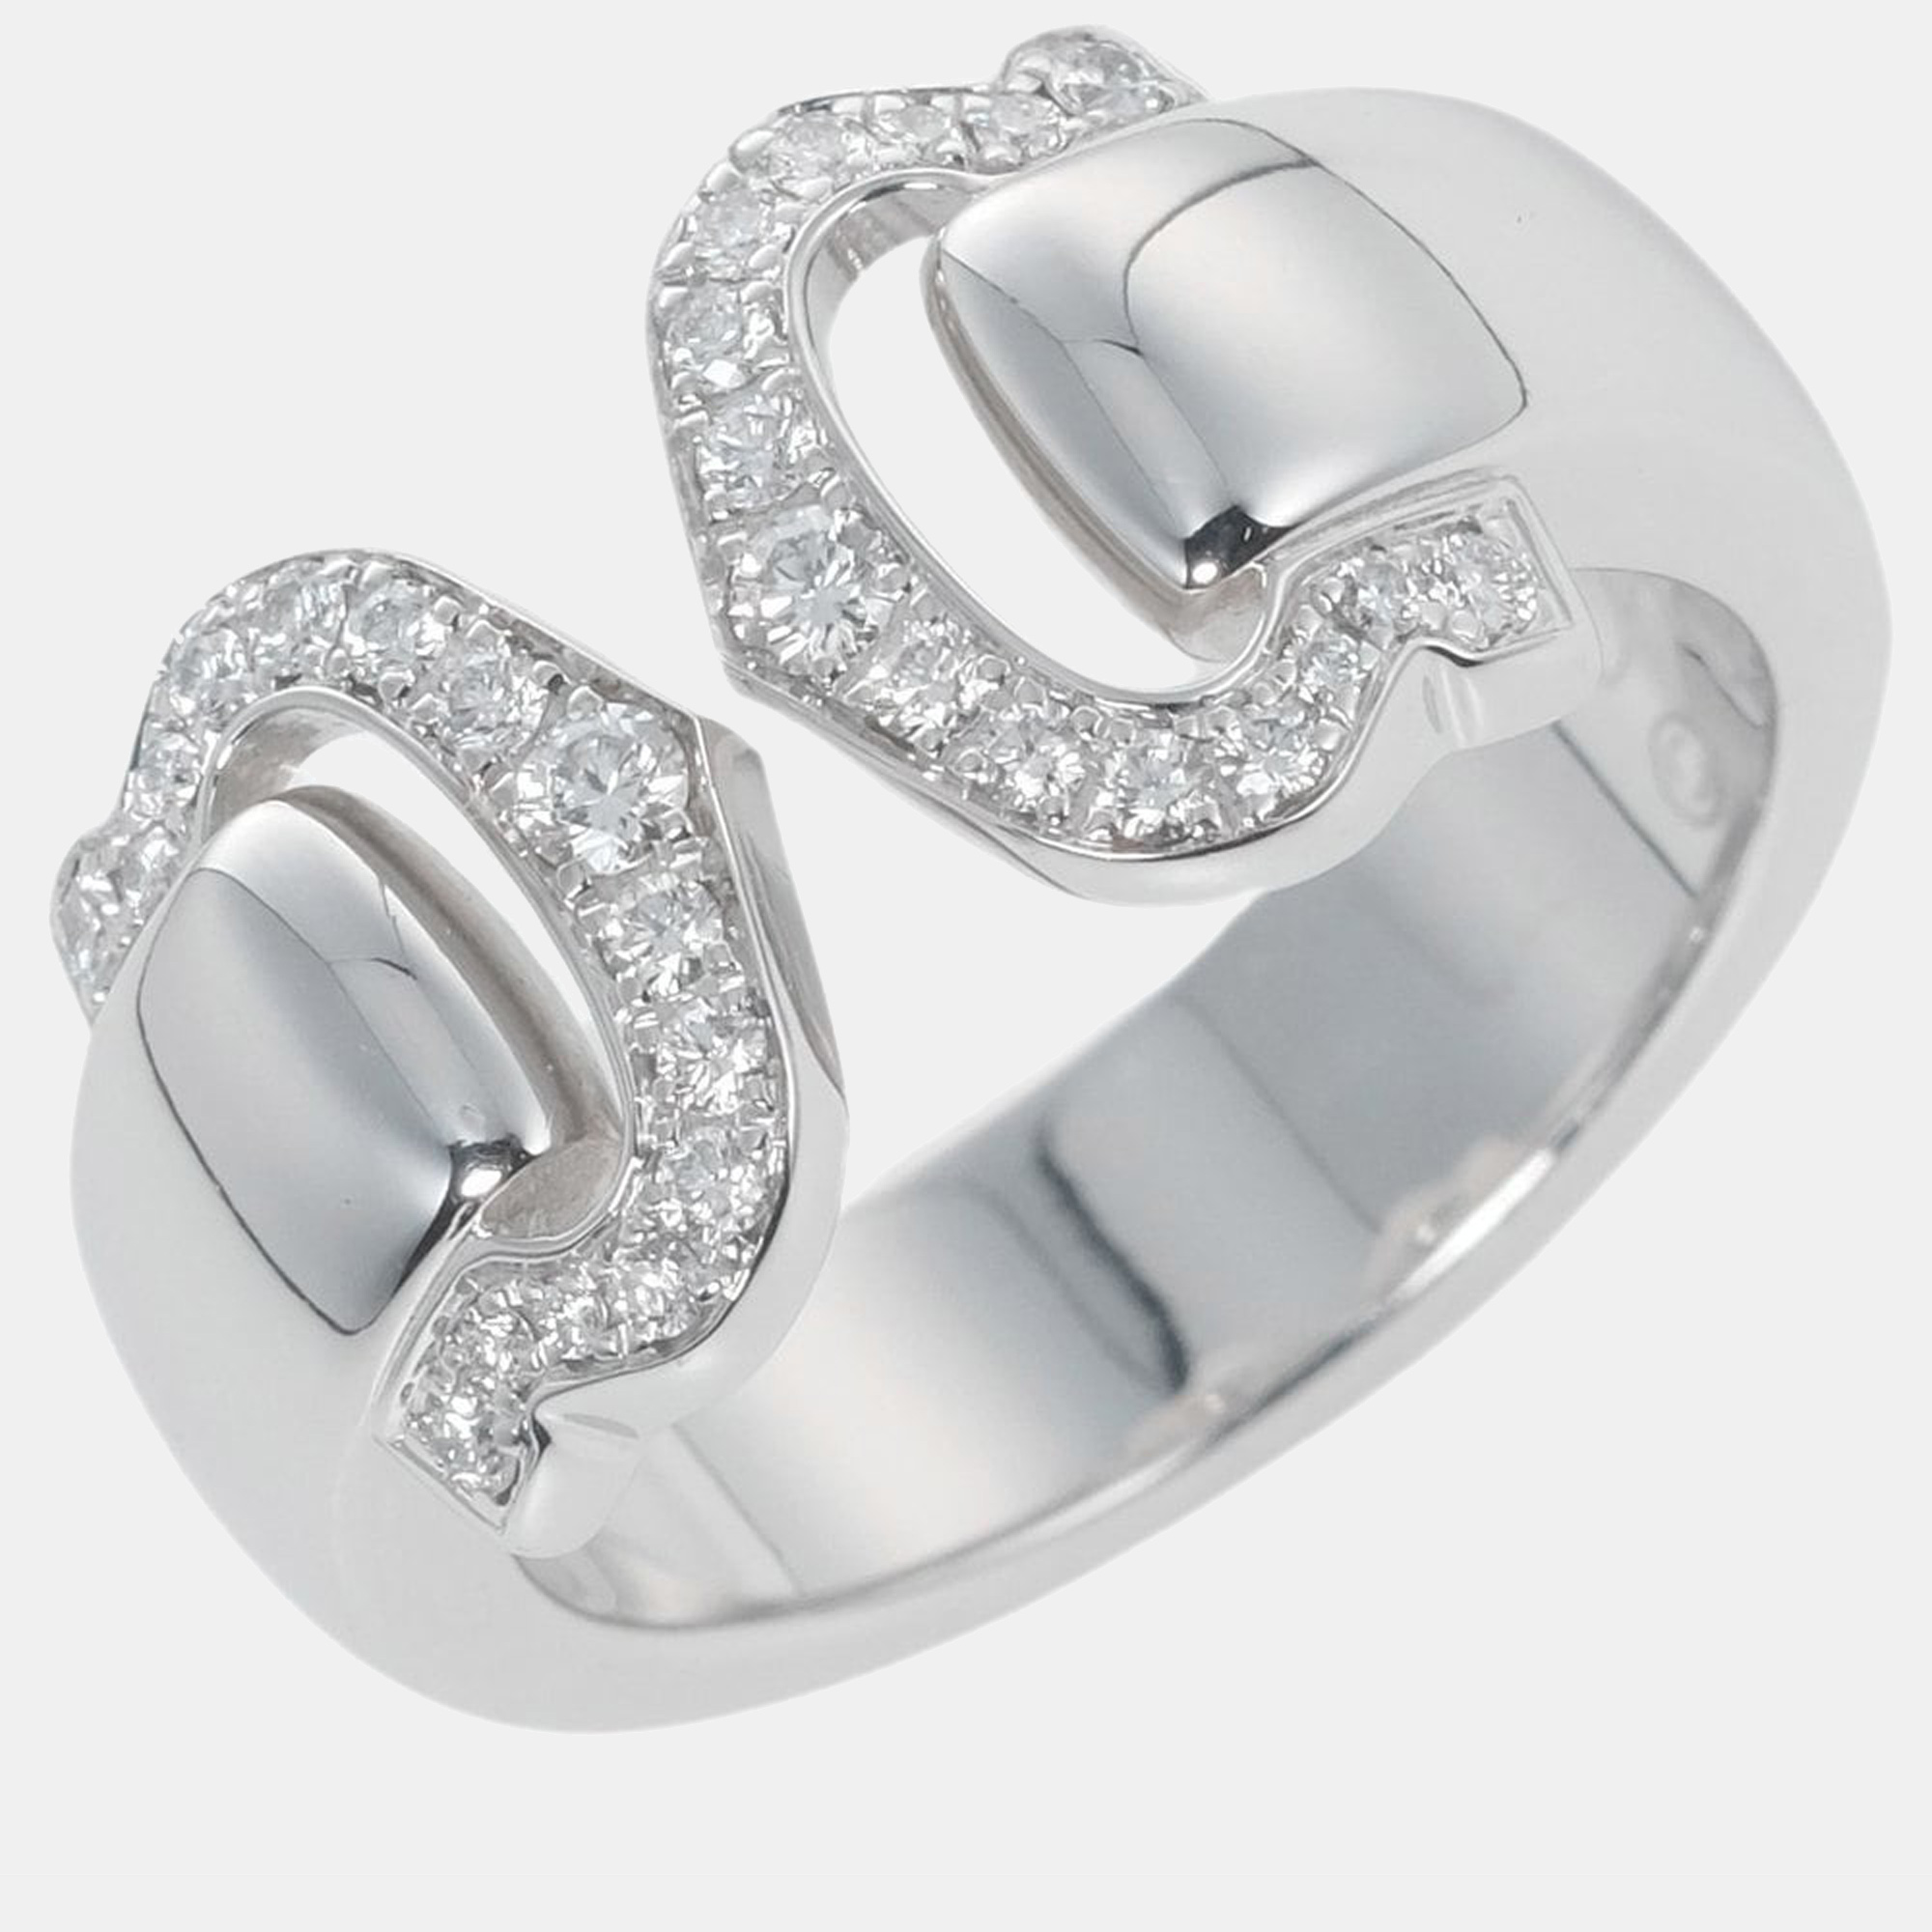 Cartier C De Cartier 18K White Gold Diamond Ring EU 47